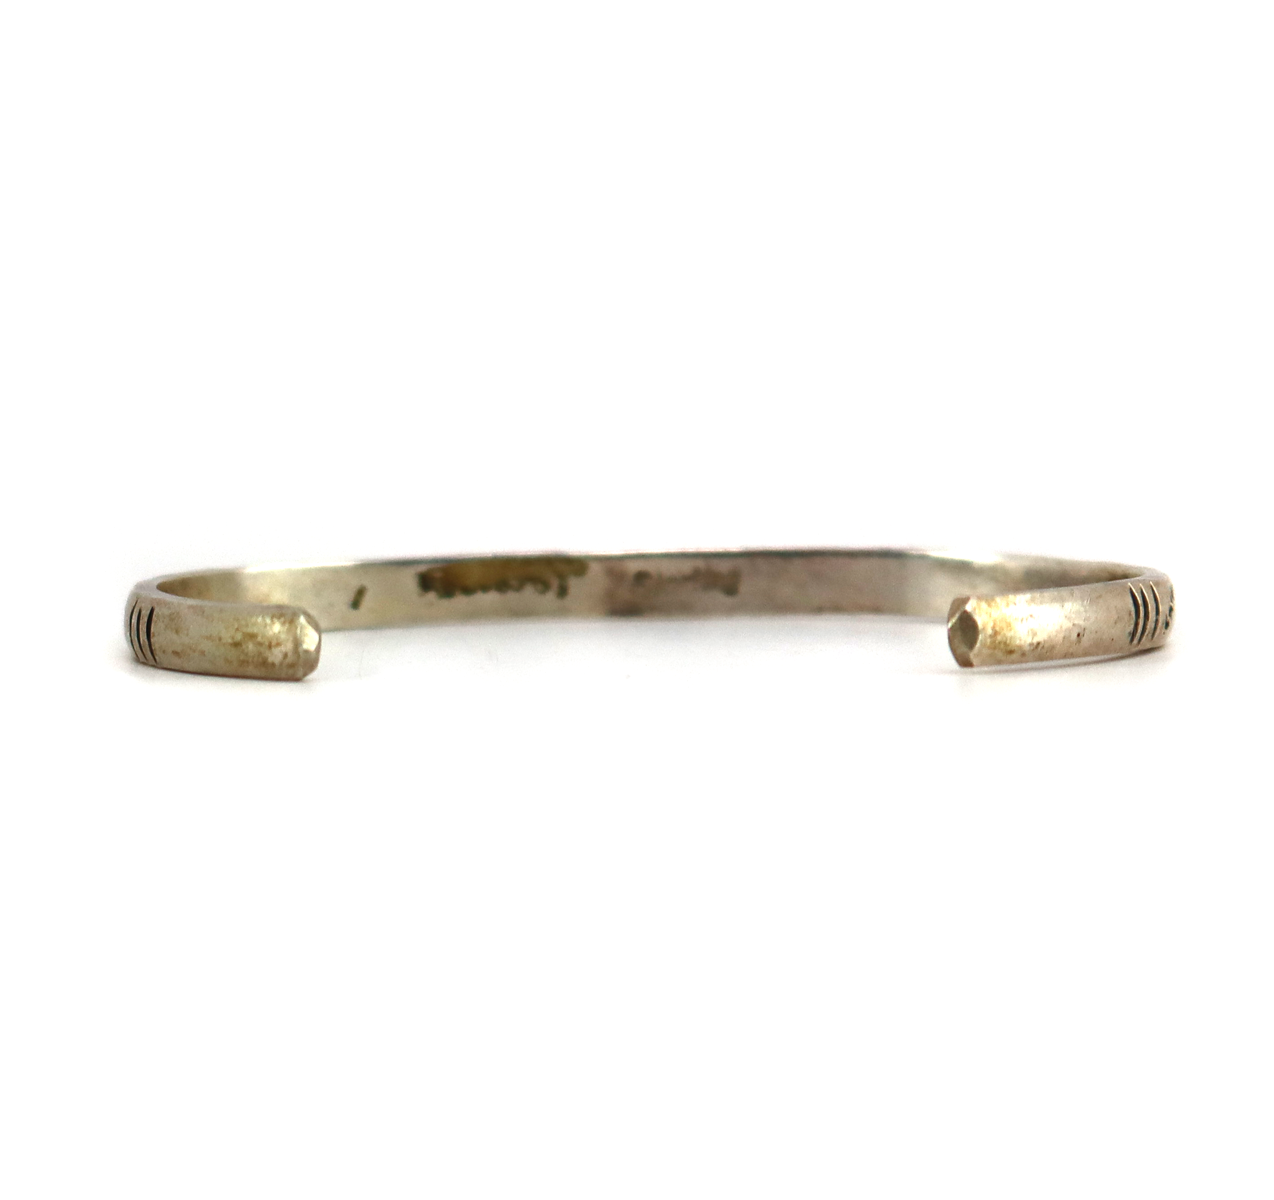 Navajo - Silver Child's Bracelet with Stamped Design c. 1940-50s, size 4.75